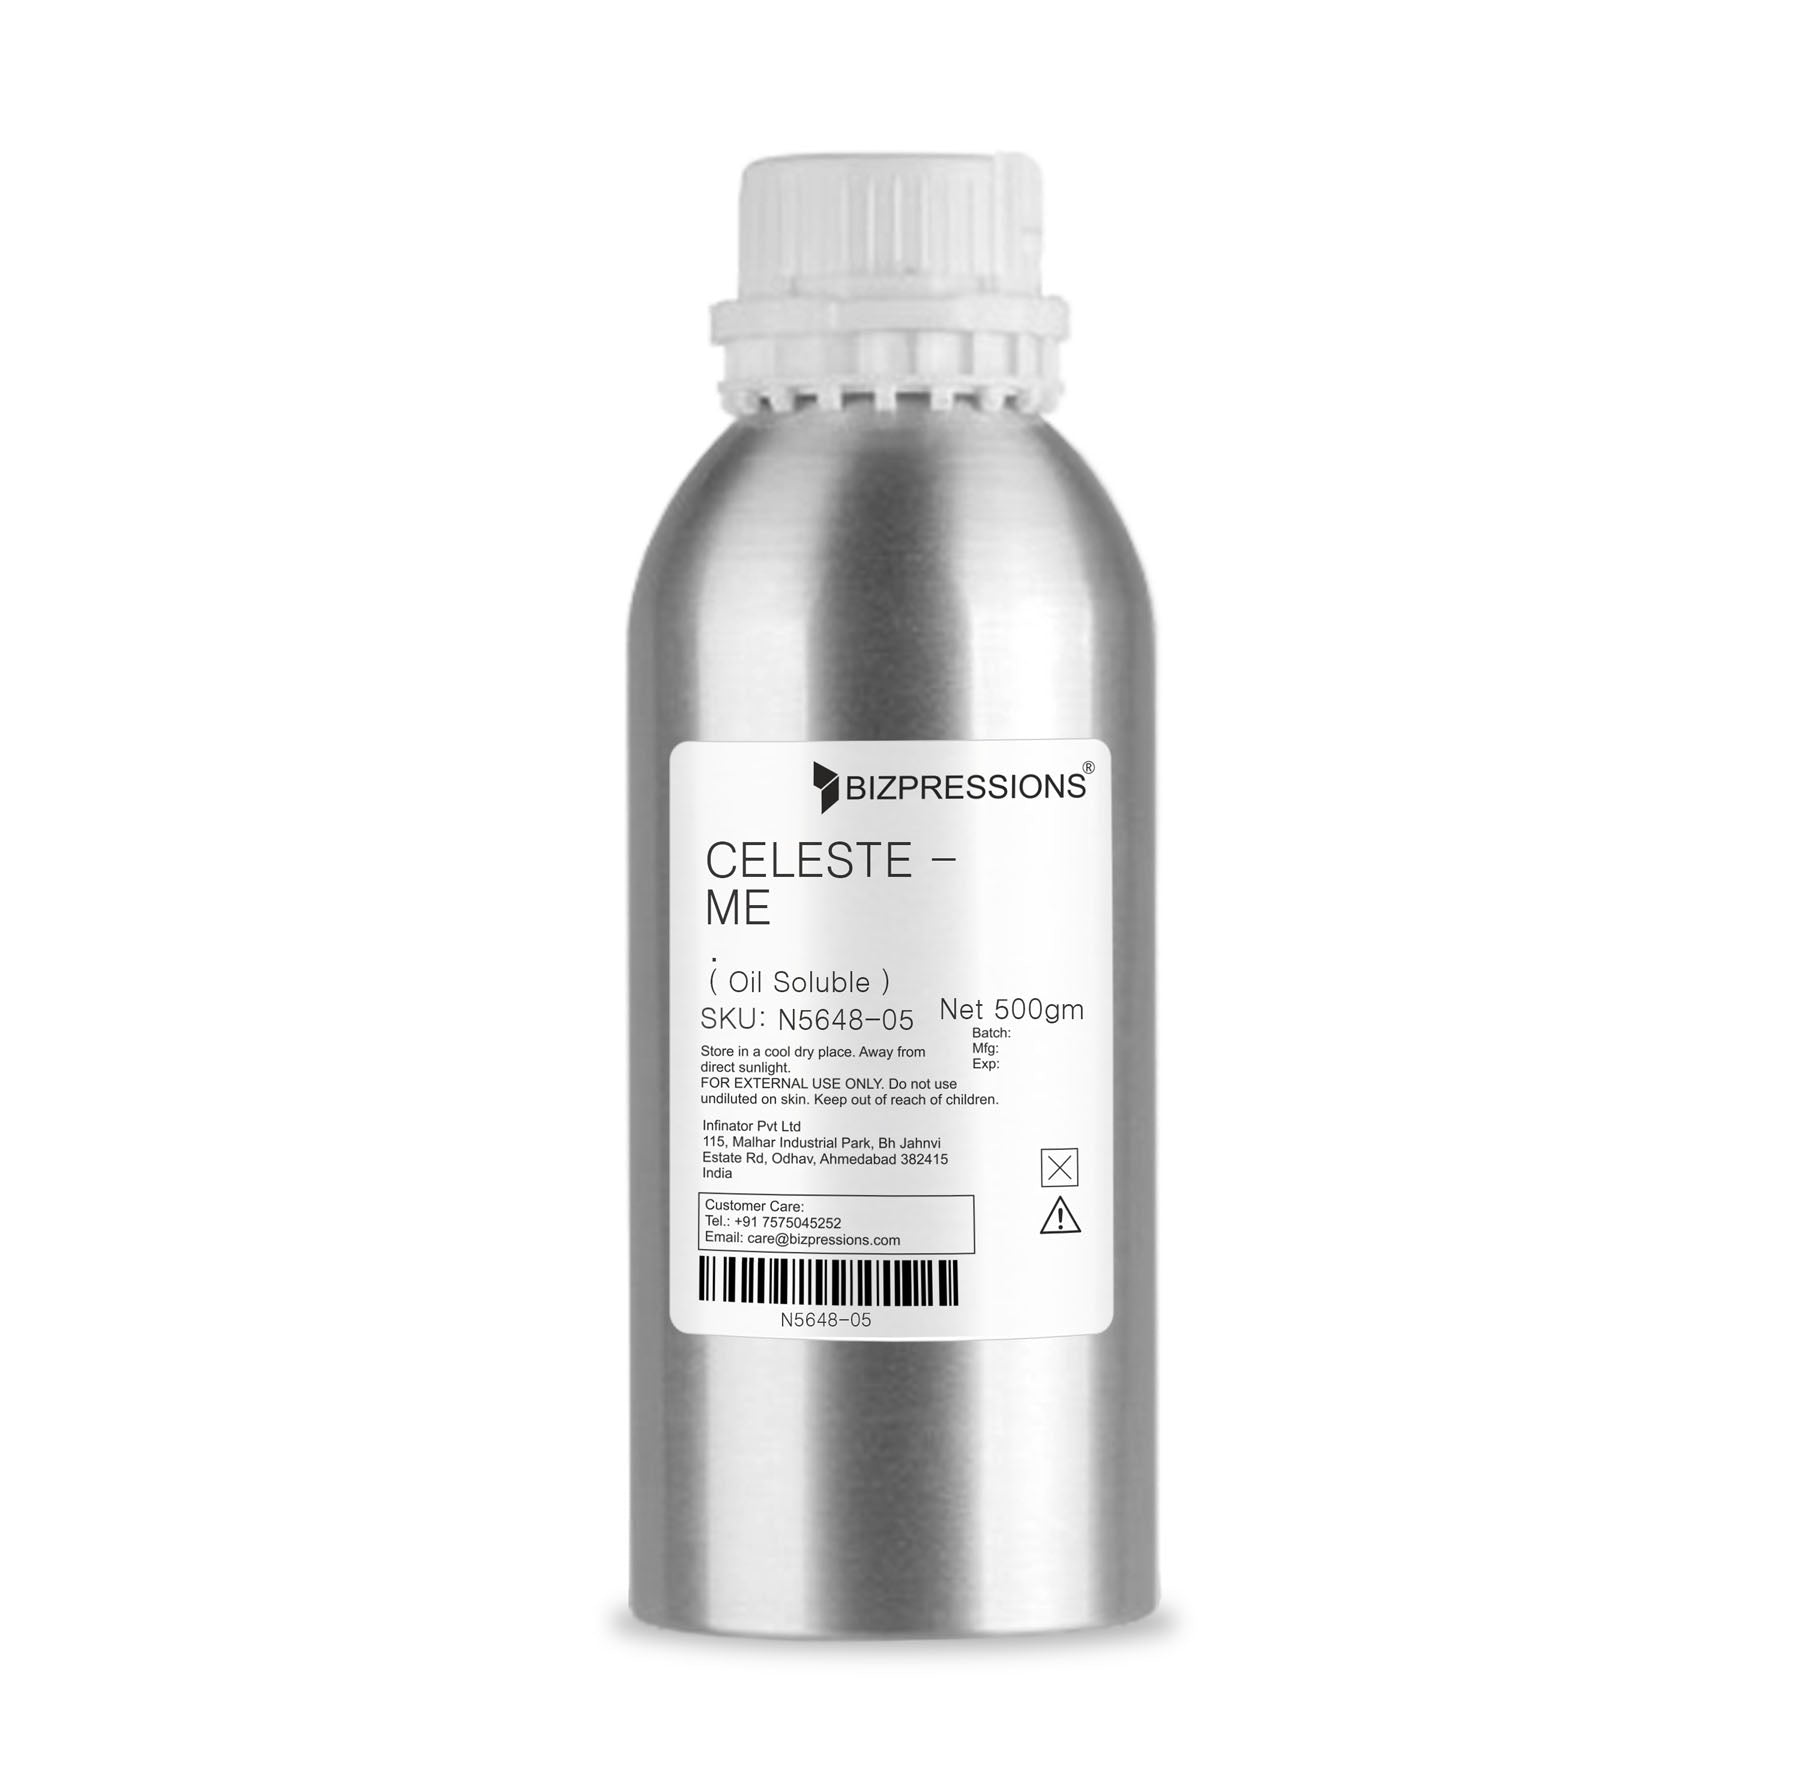 CELESTE - ME - Fragrance ( Oil Soluble ) - 500 gm